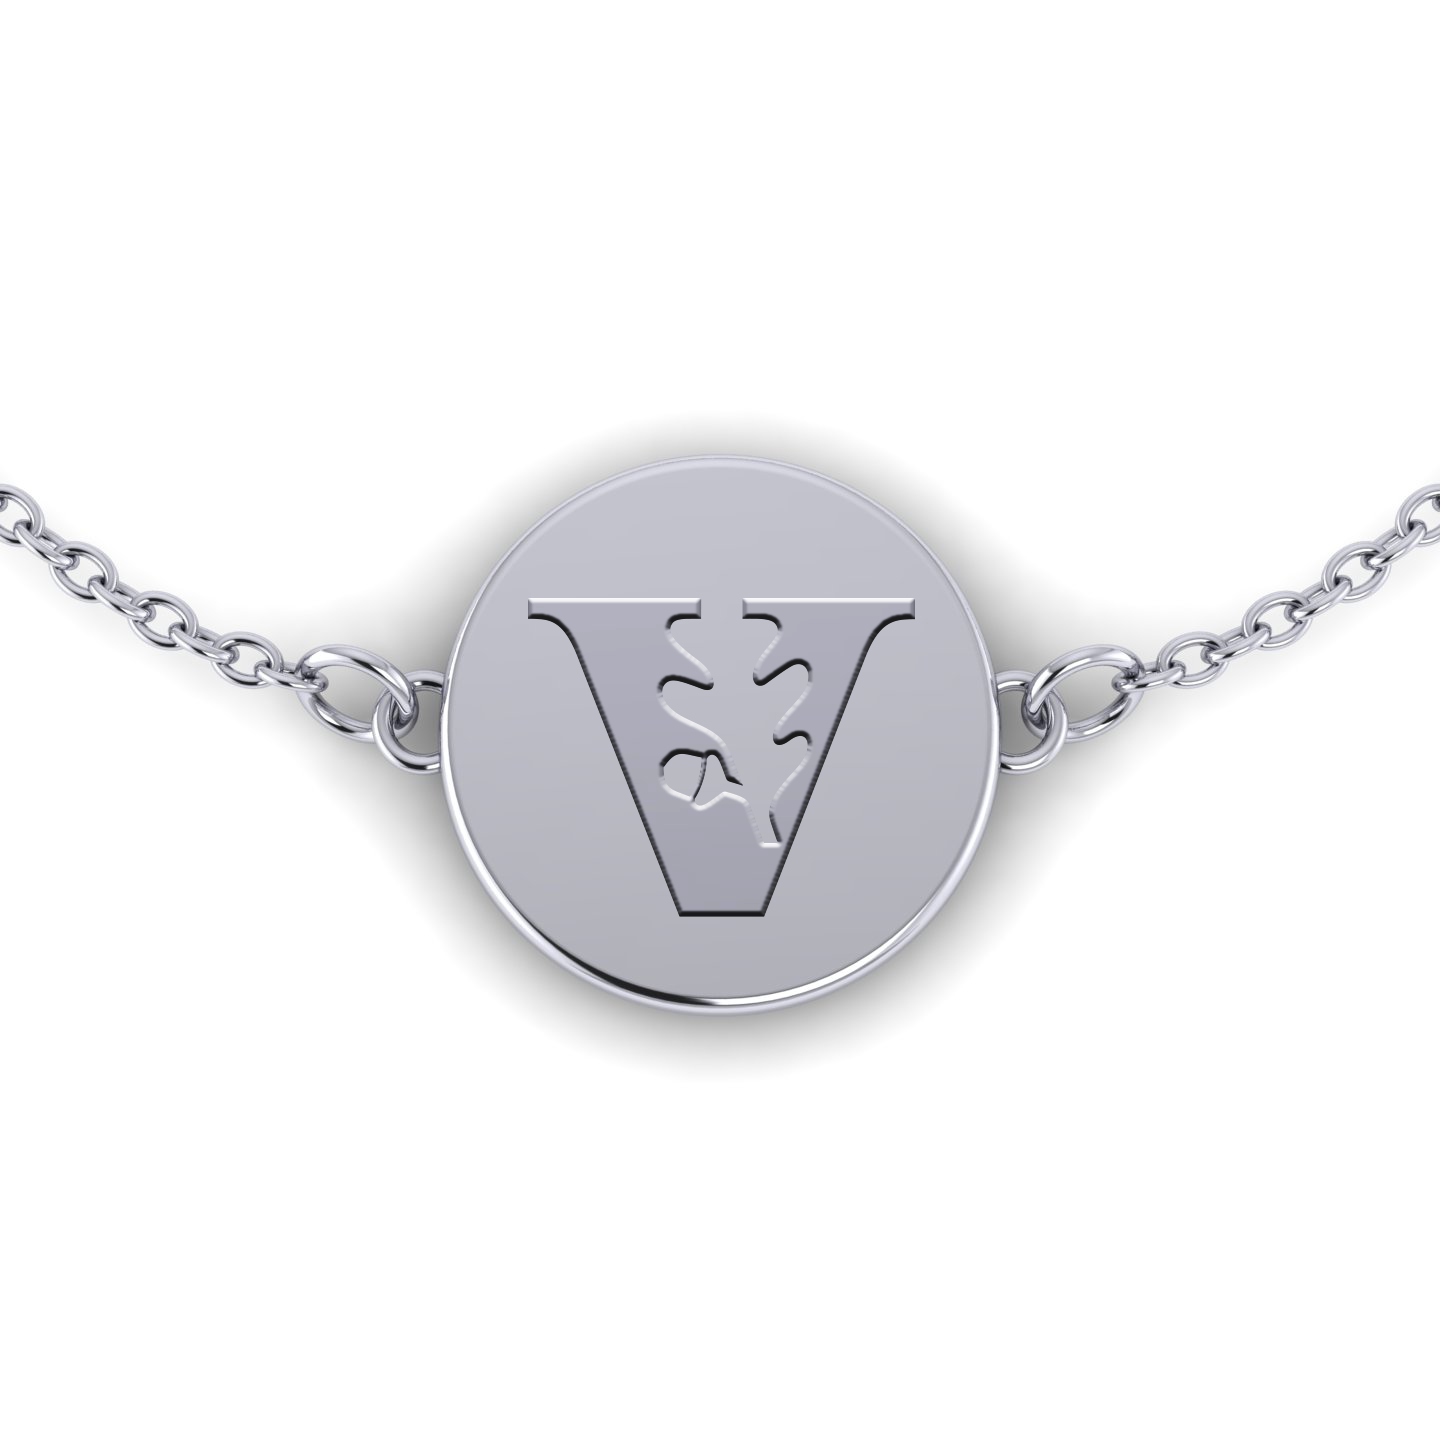 Vanderbilt Infinity Bracelet 02